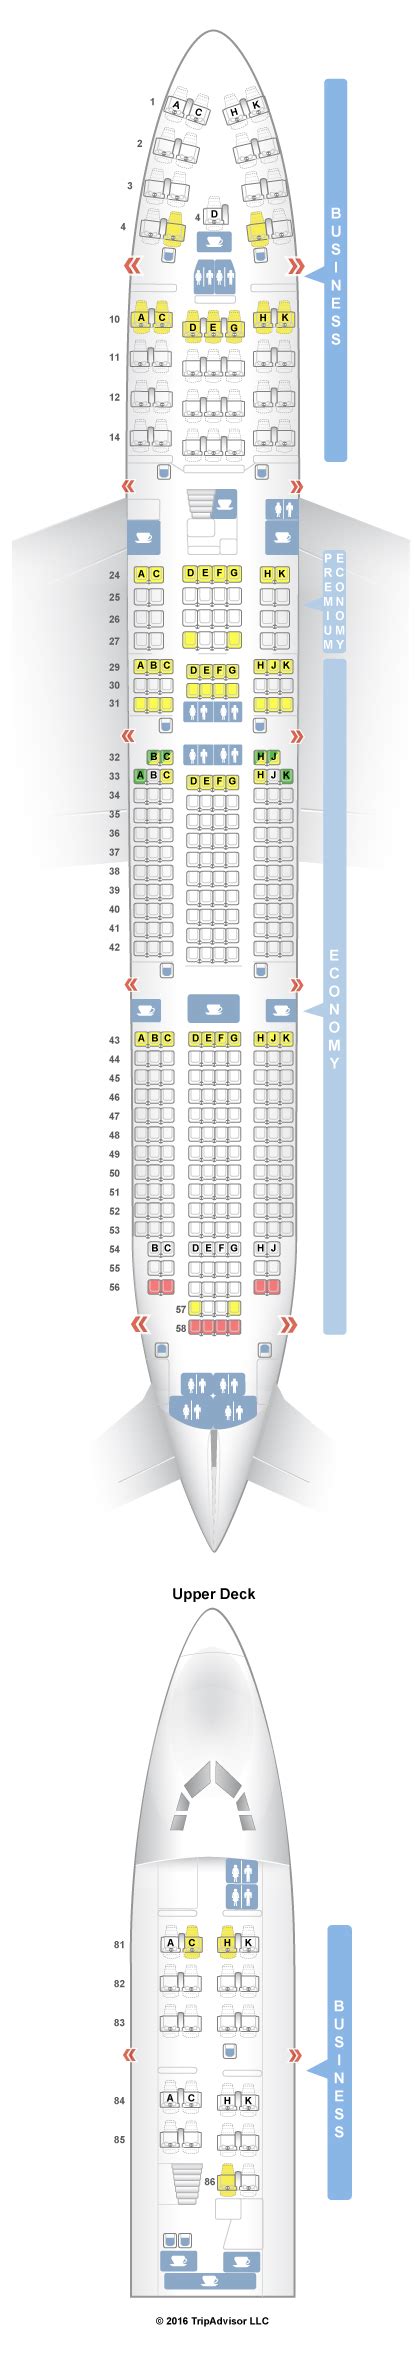 Seatguru Seat Map Lufthansa Boeing 747 400 744 V2